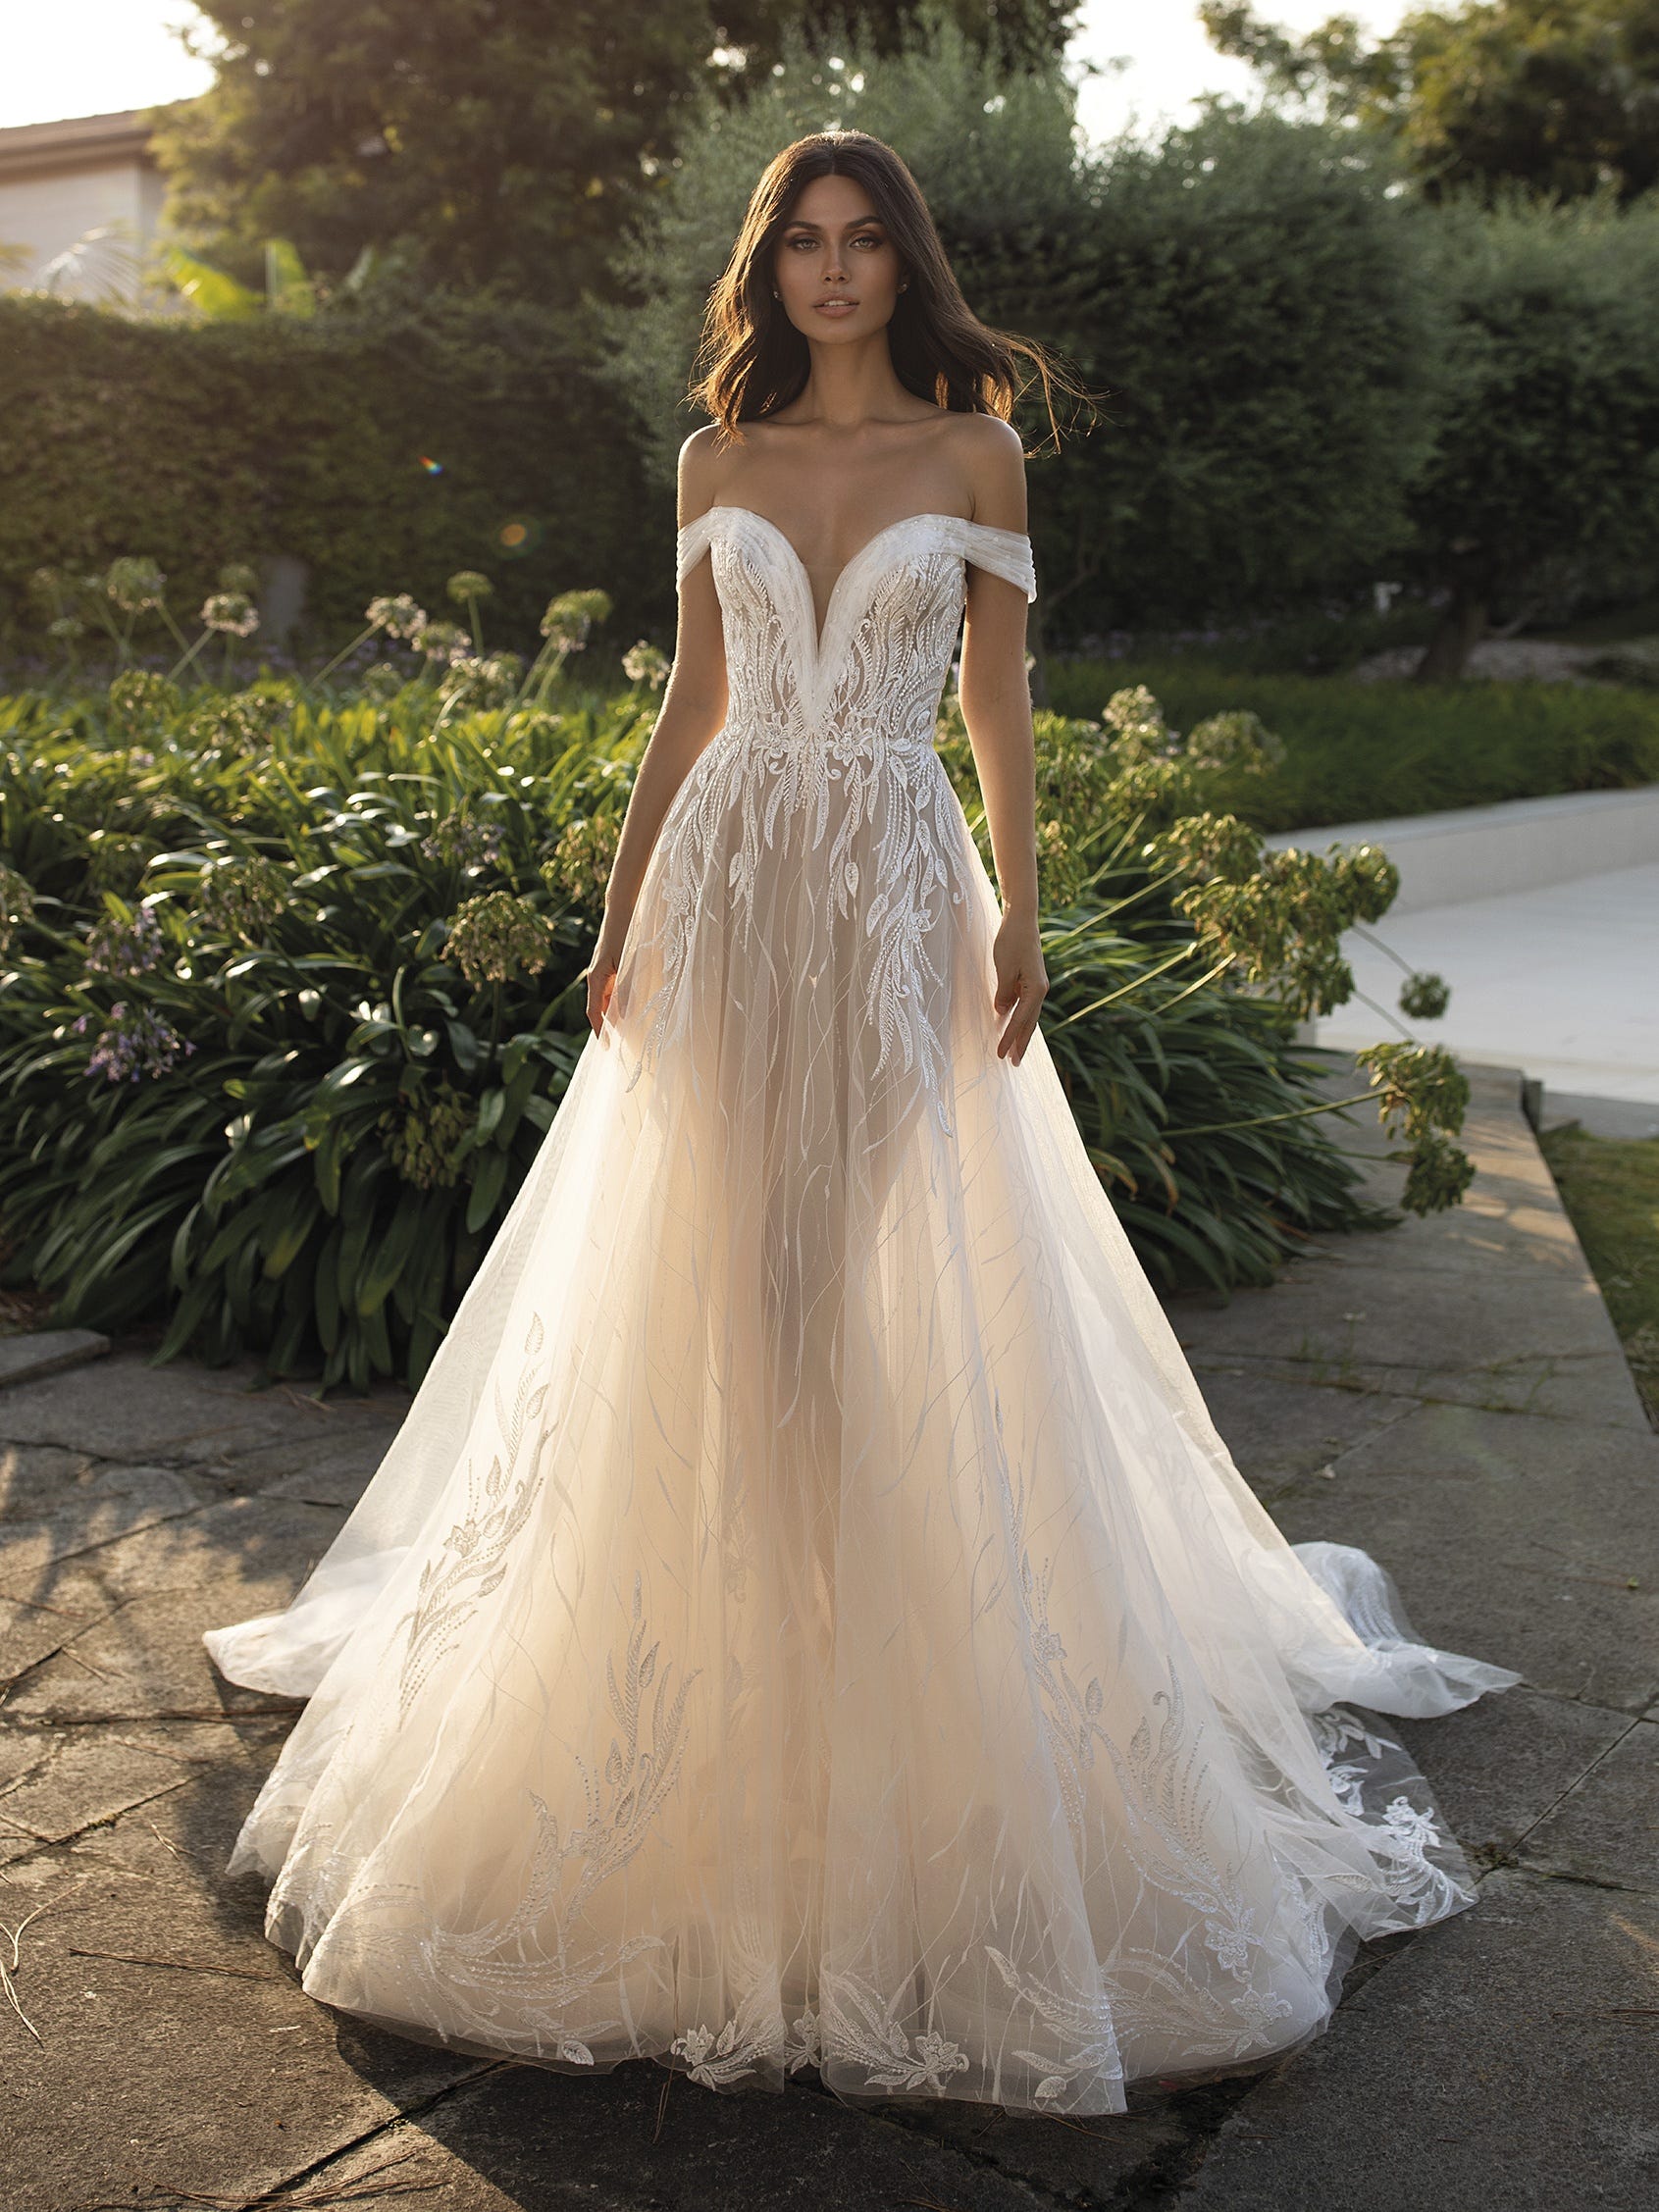 Grecian Style Wedding Dresses & Greek-Inspired Gown Ideas - Brit + Co